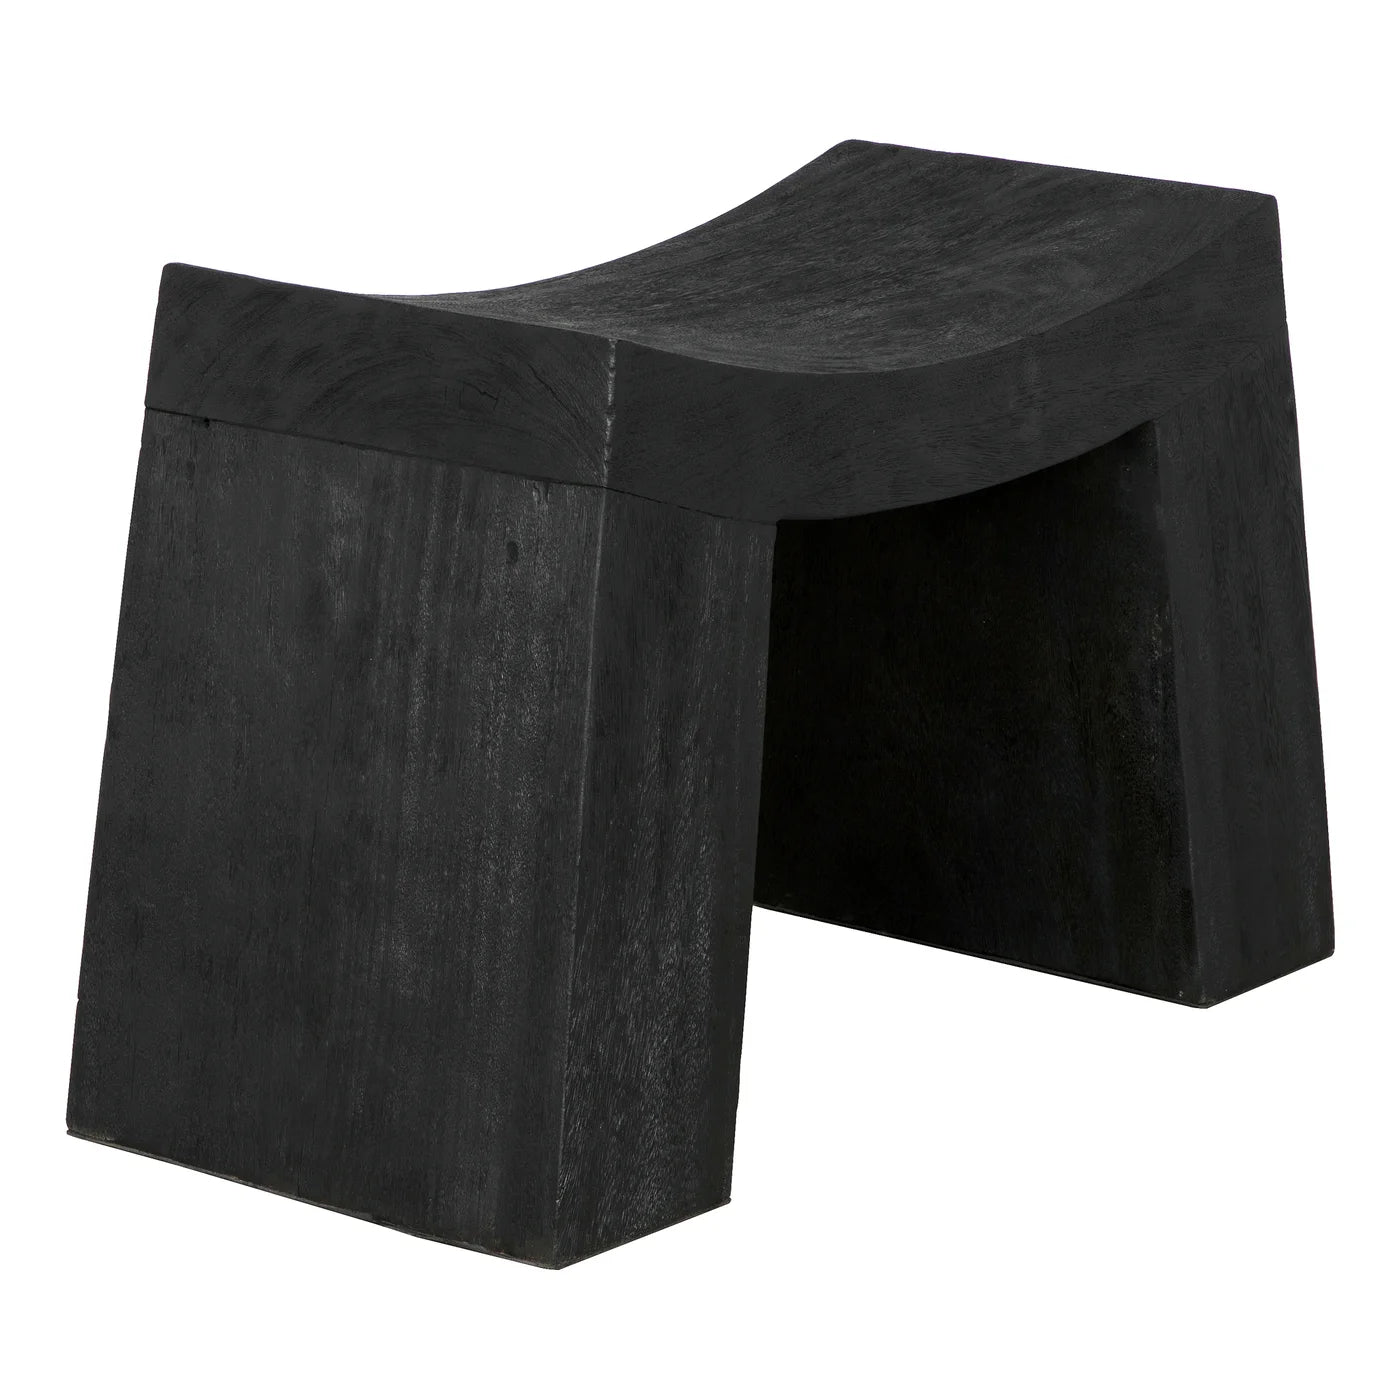 noir ishiguro stool side angle